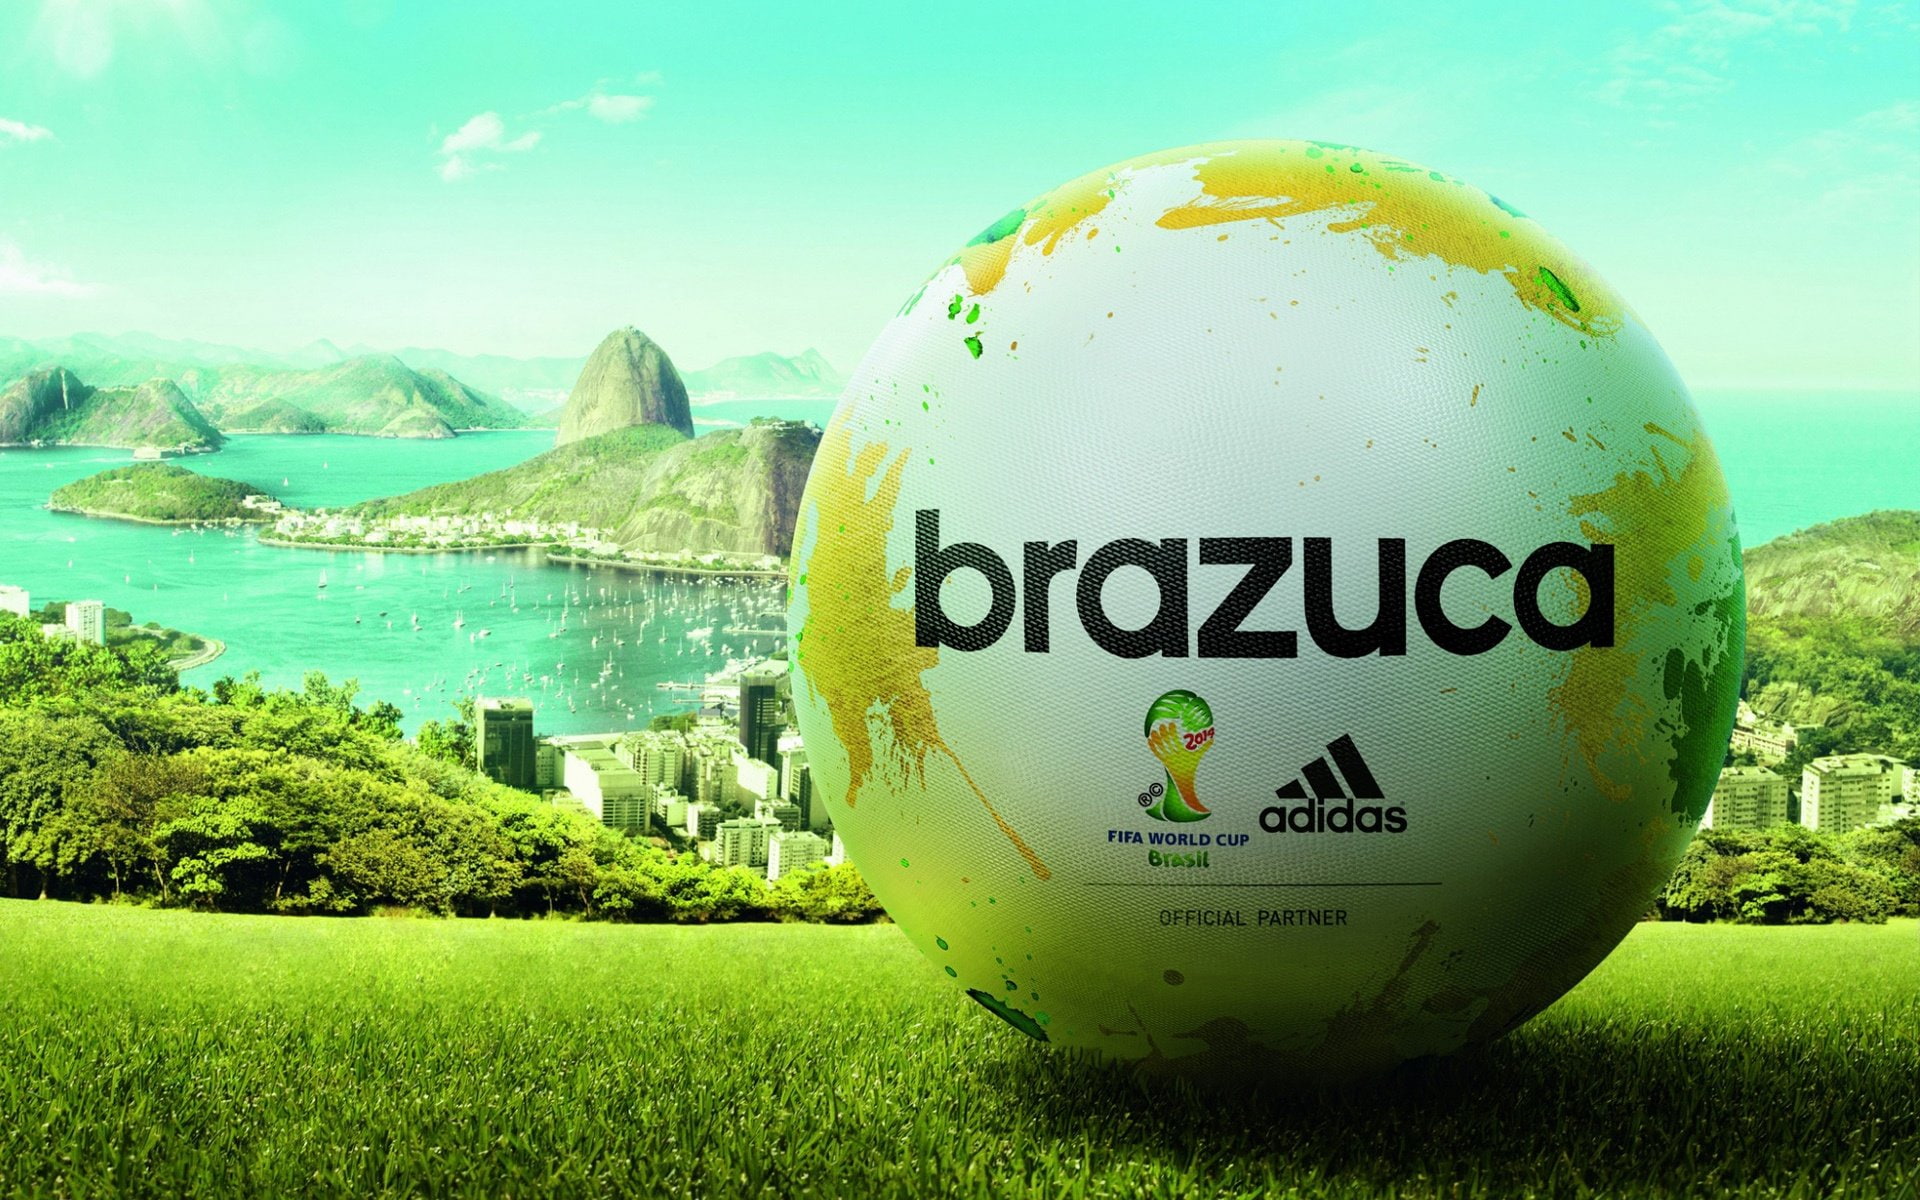 2014-1920x1200, adidas, ball, brazuca, cup, fifa, match, world